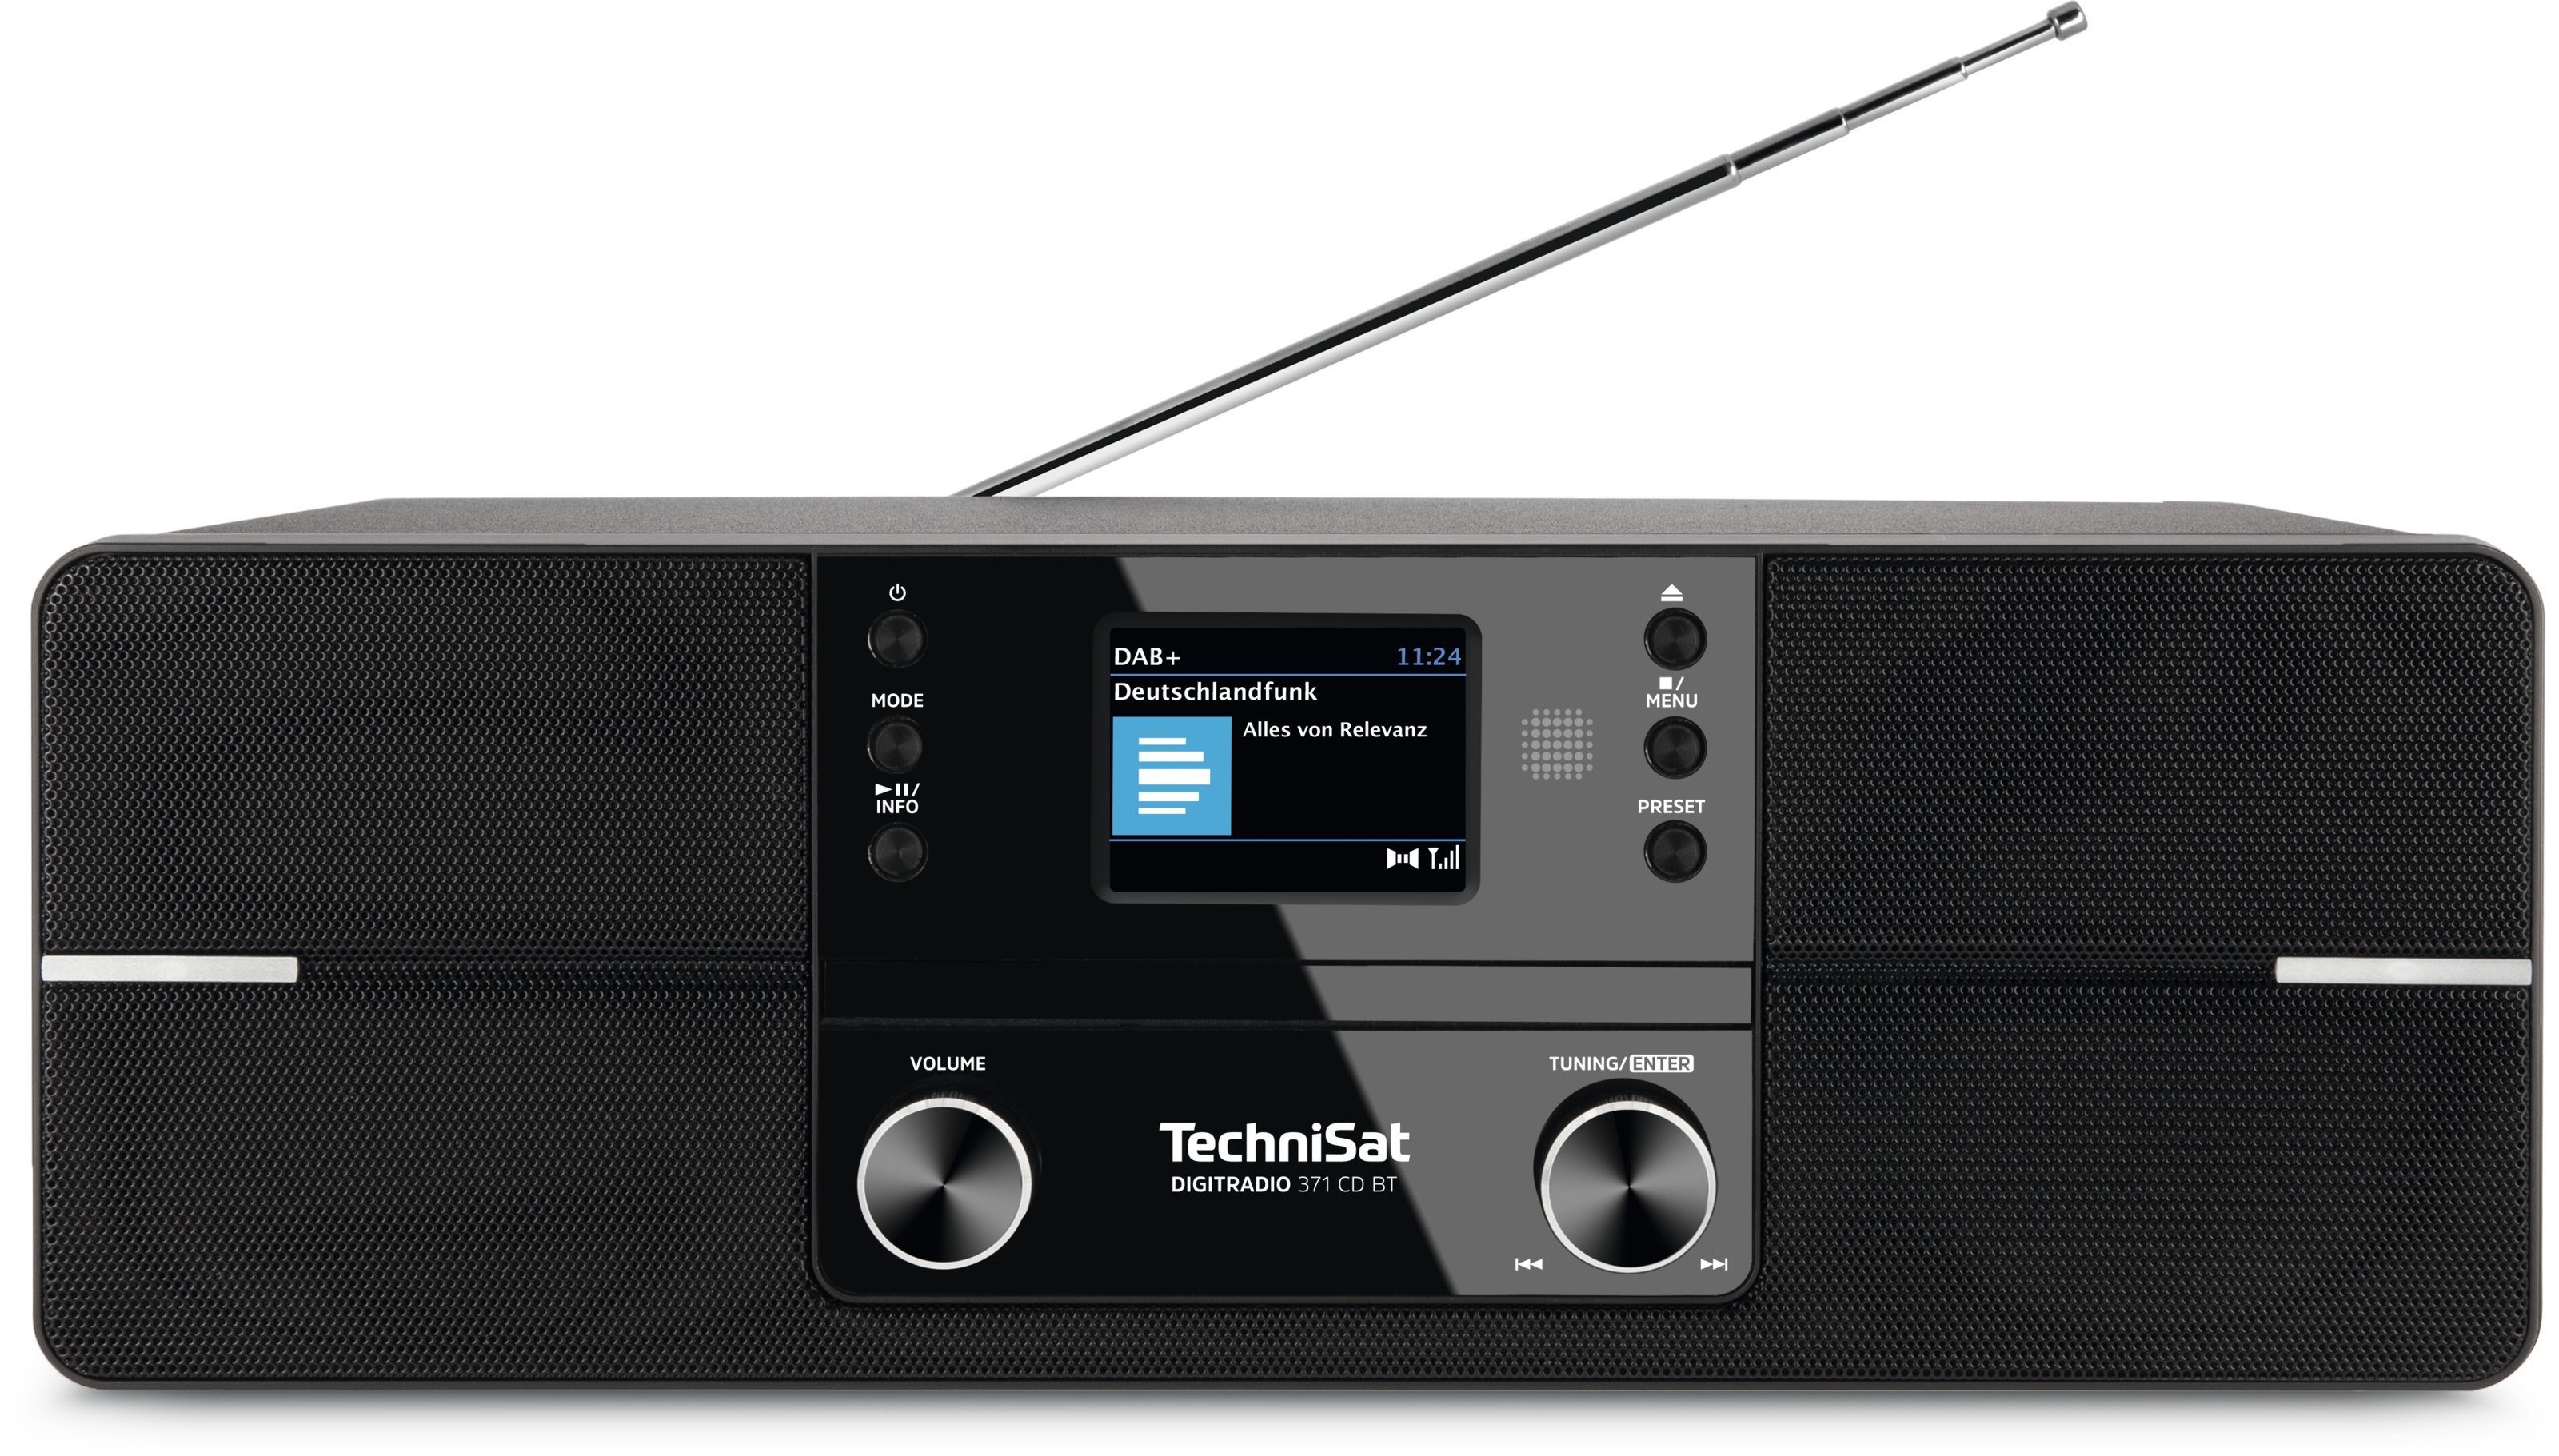 10,00 Fernbedienung) (DAB) Bluetooth, schwarz CD (DAB), UKW, 371 DIGITRADIO BT Radiowecktimer, Inklusive Digitalradio W, (Digitalradio CD-Player, TechniSat